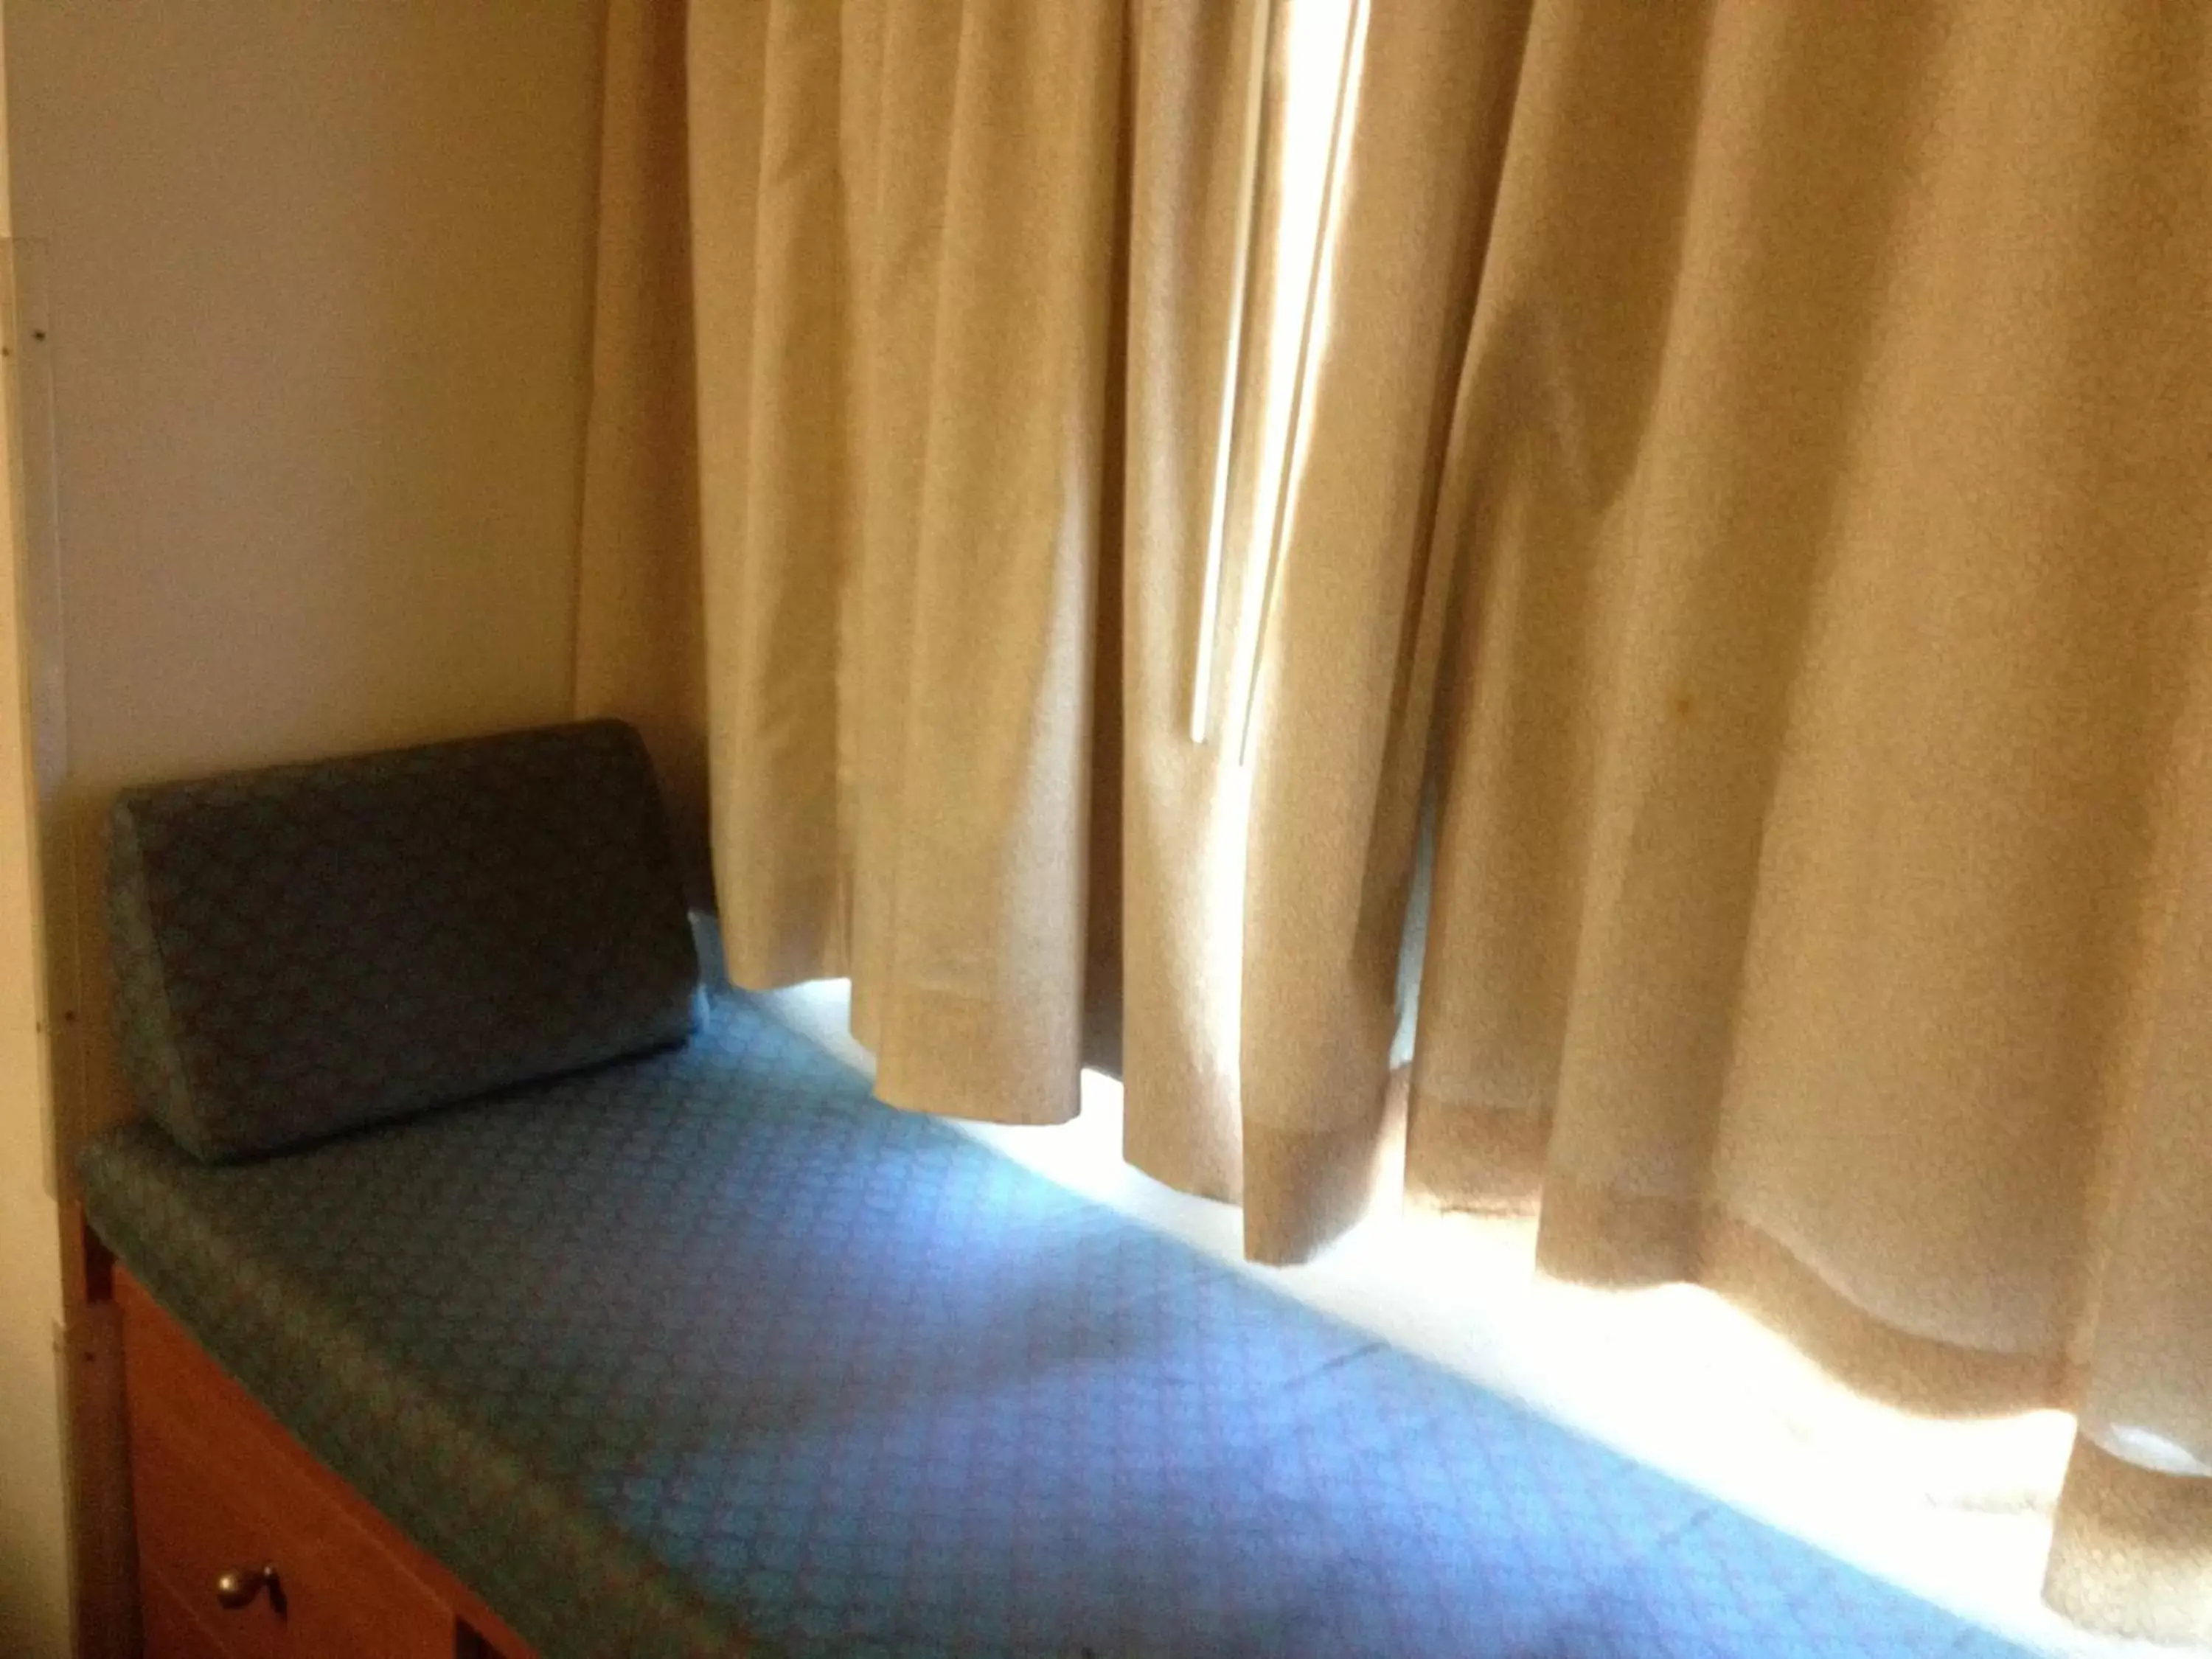 Bed in Microtel Inn & Suites by Wyndham Denver Airport